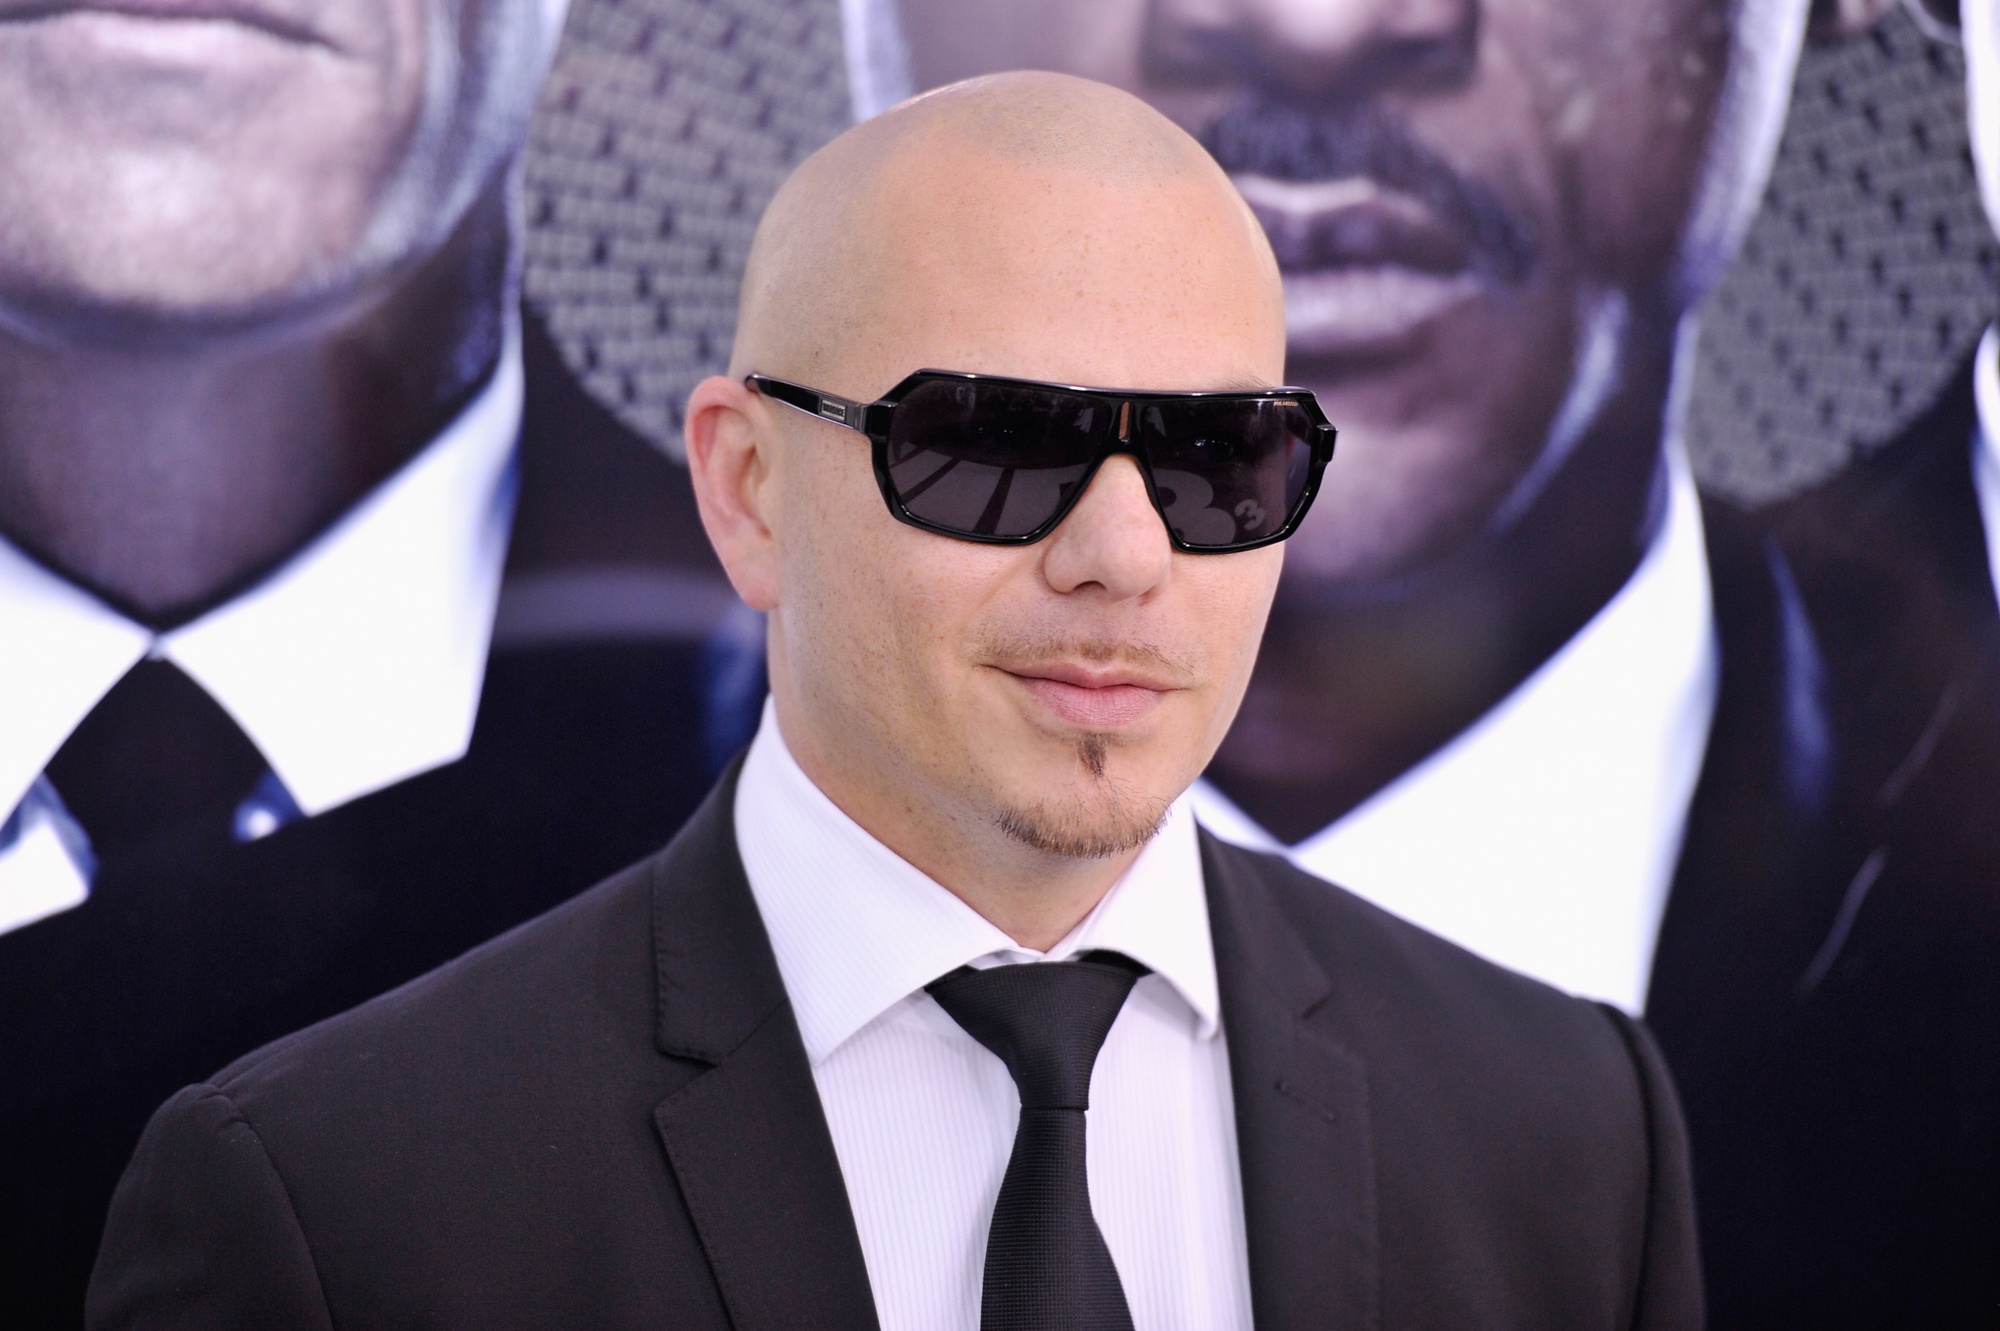 pitbull (singer), music, pitbull, american, armando christian pérez, rapper, singer, sunglasses